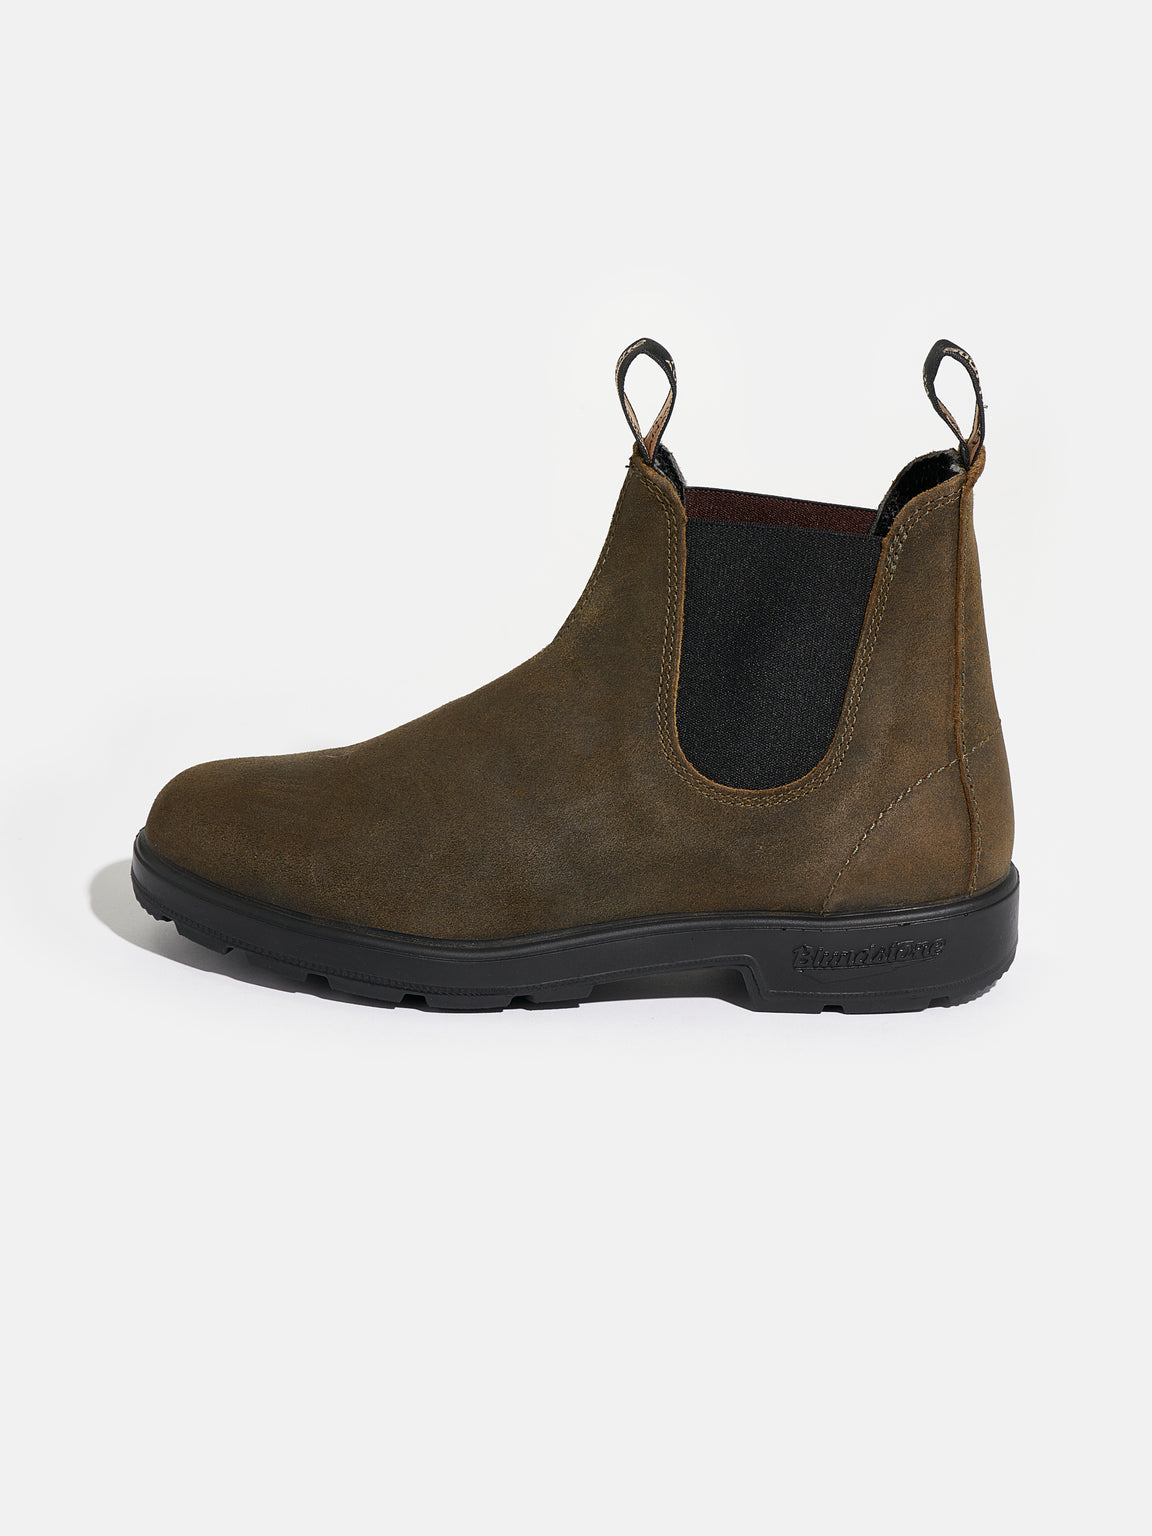 Blundstone | 1615 Original Chelsea Boots For Men | Bellerose E-shop